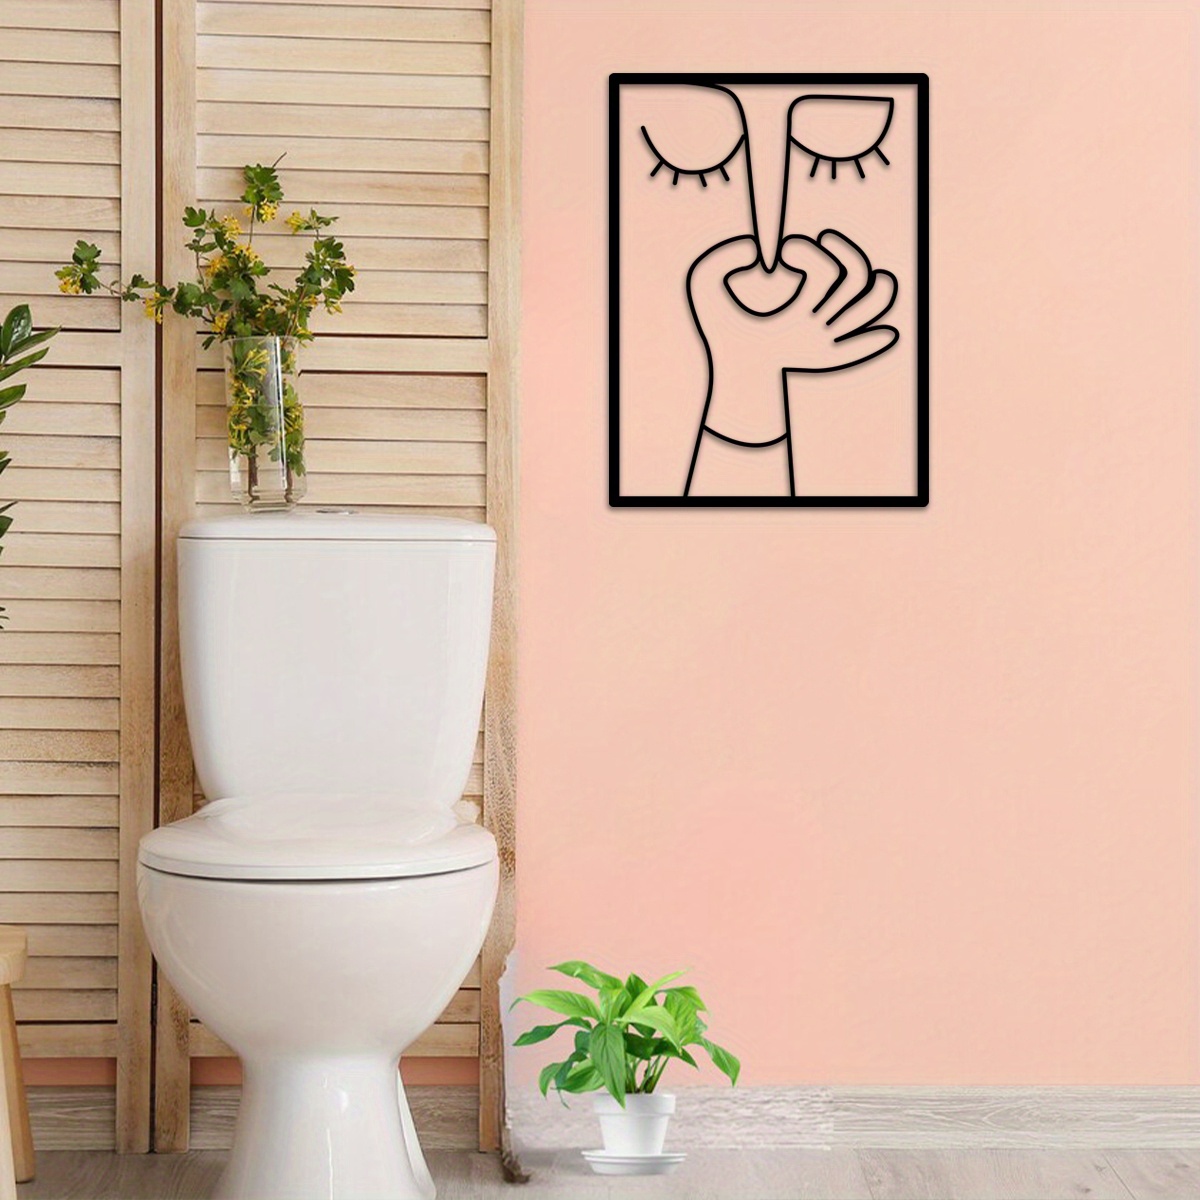 

1pc, Funny Toilet Metal Wall Art, Funny Bathroom Sign, Minimal Line Art, Guest Wc, Restroom Decor, Toilet Humor